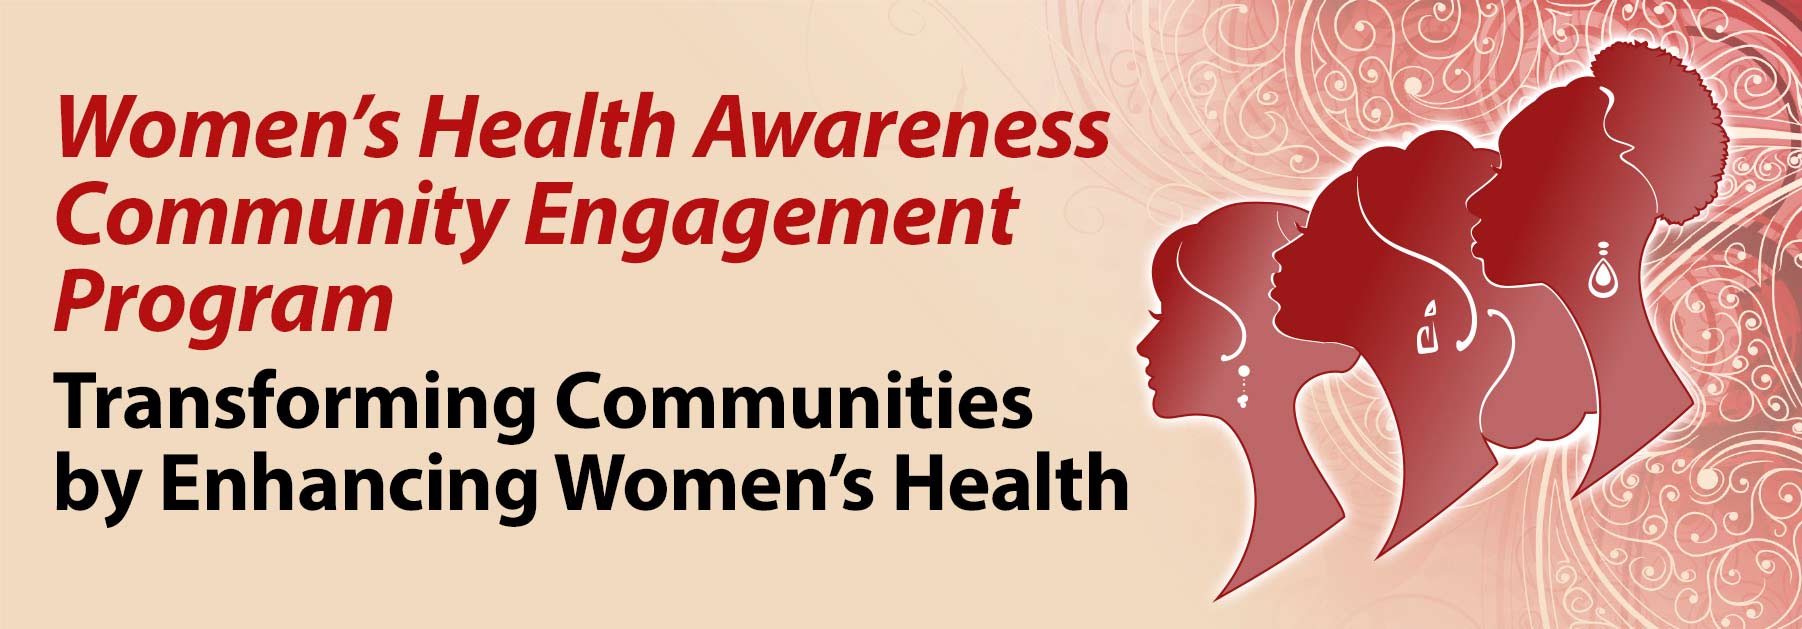 Women's Health Awareness Transforming Communities by Enhancing Women's Health